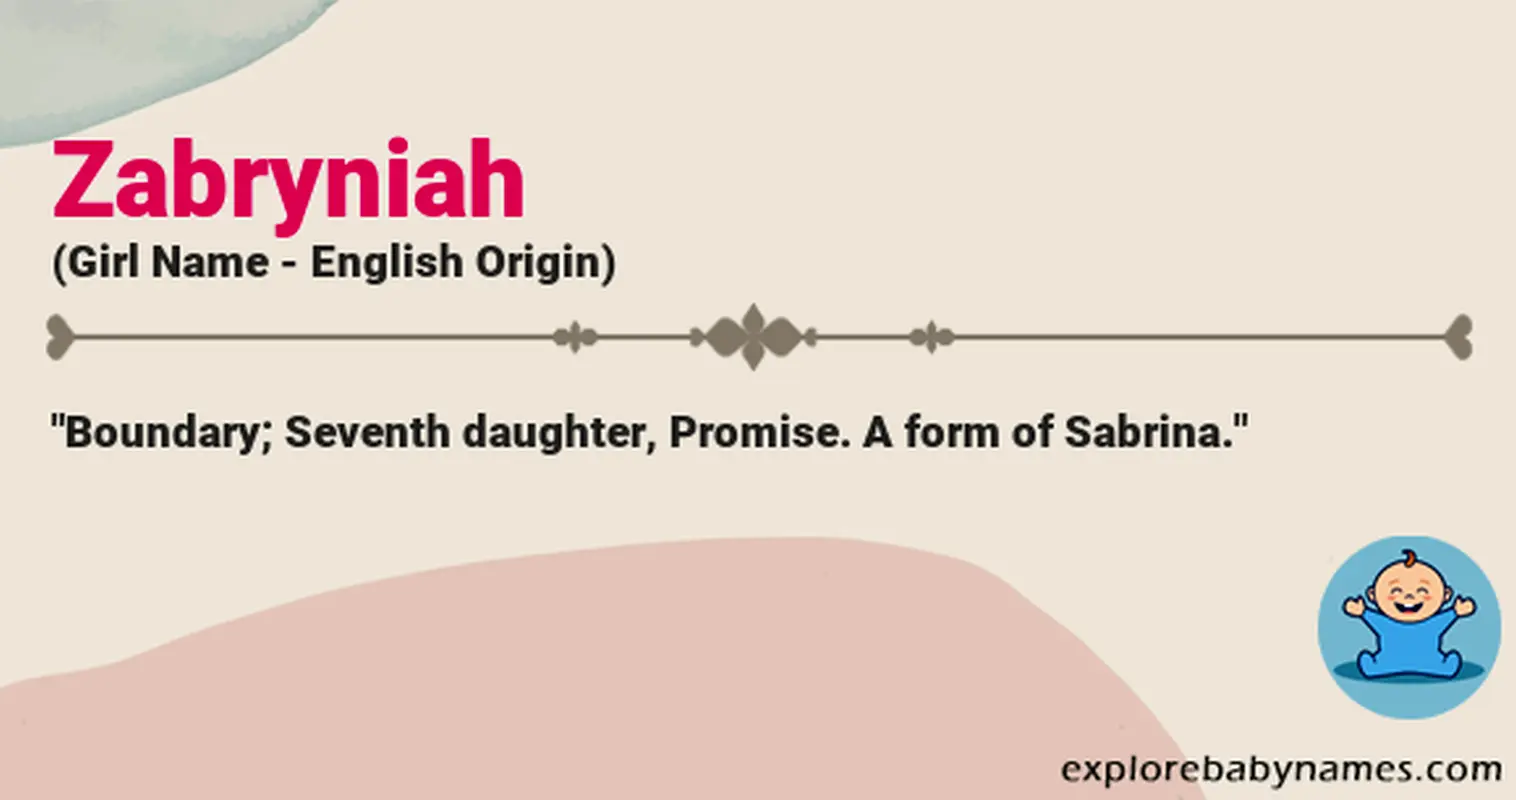 Meaning of Zabryniah